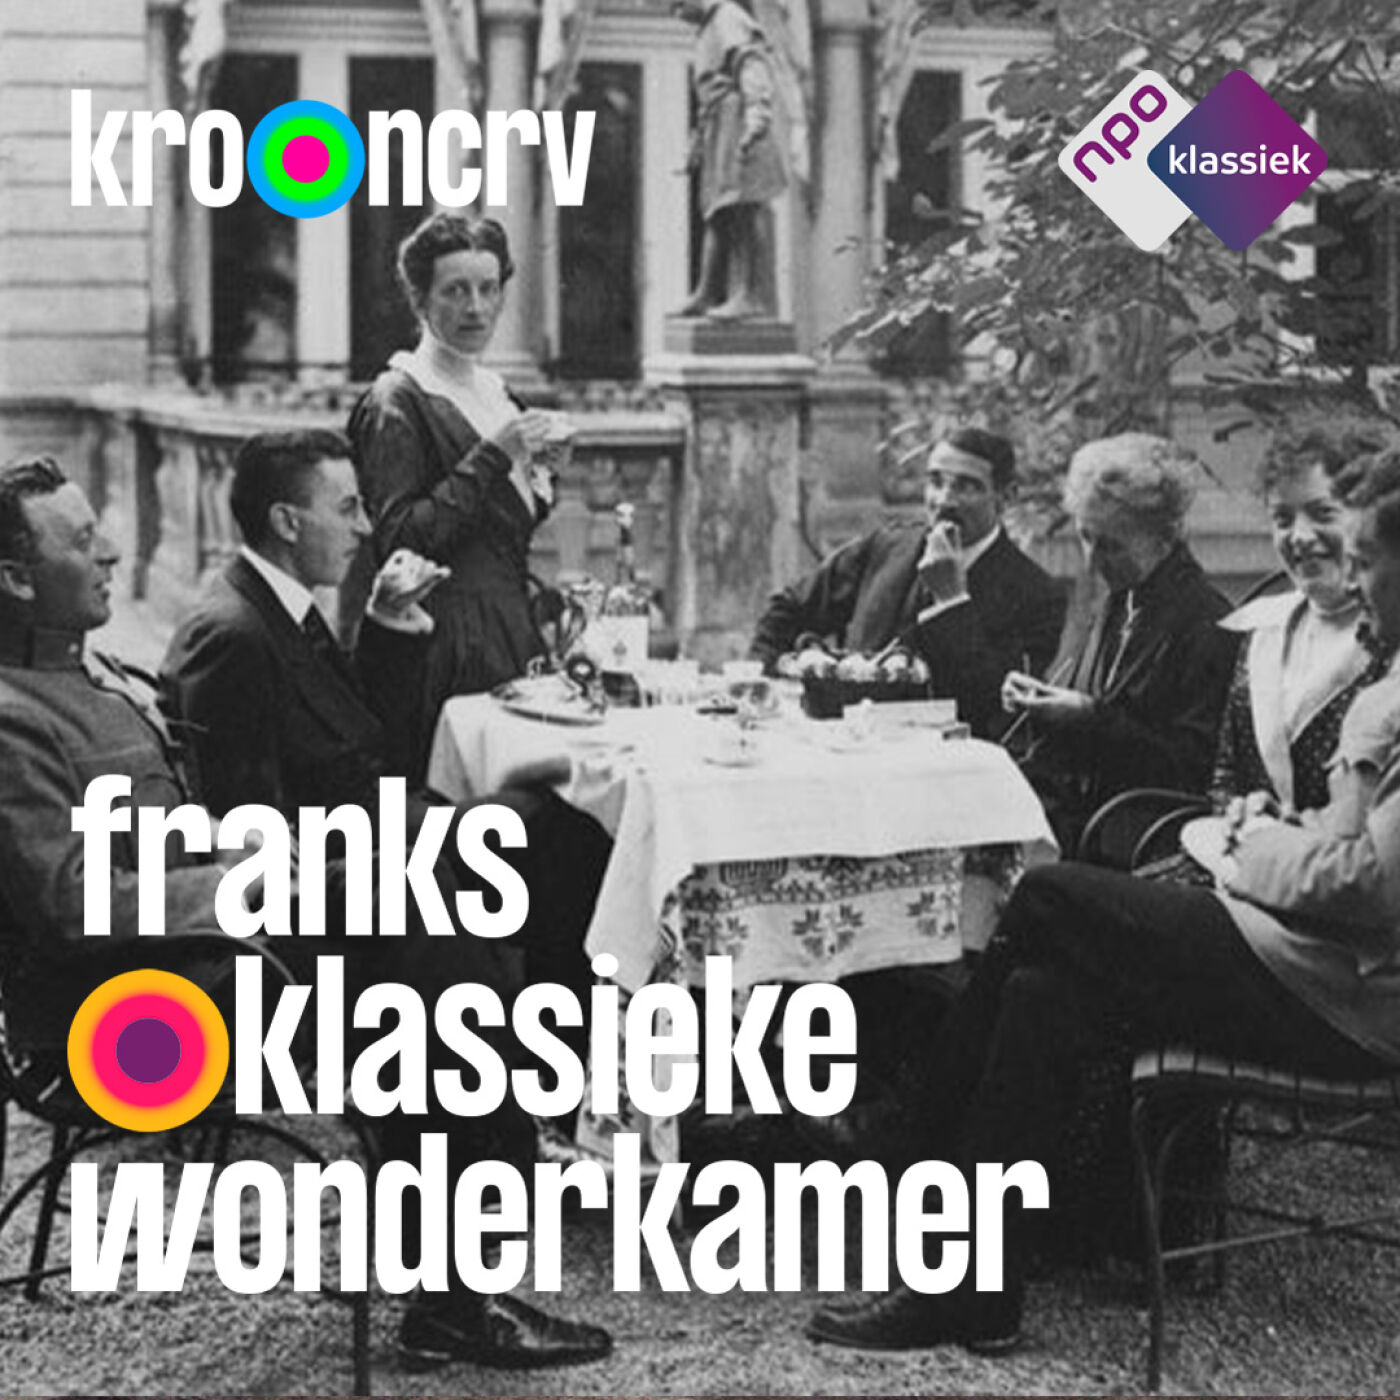 #31 - Franks Klassieke Wonderkamer - ‘Tractatus’